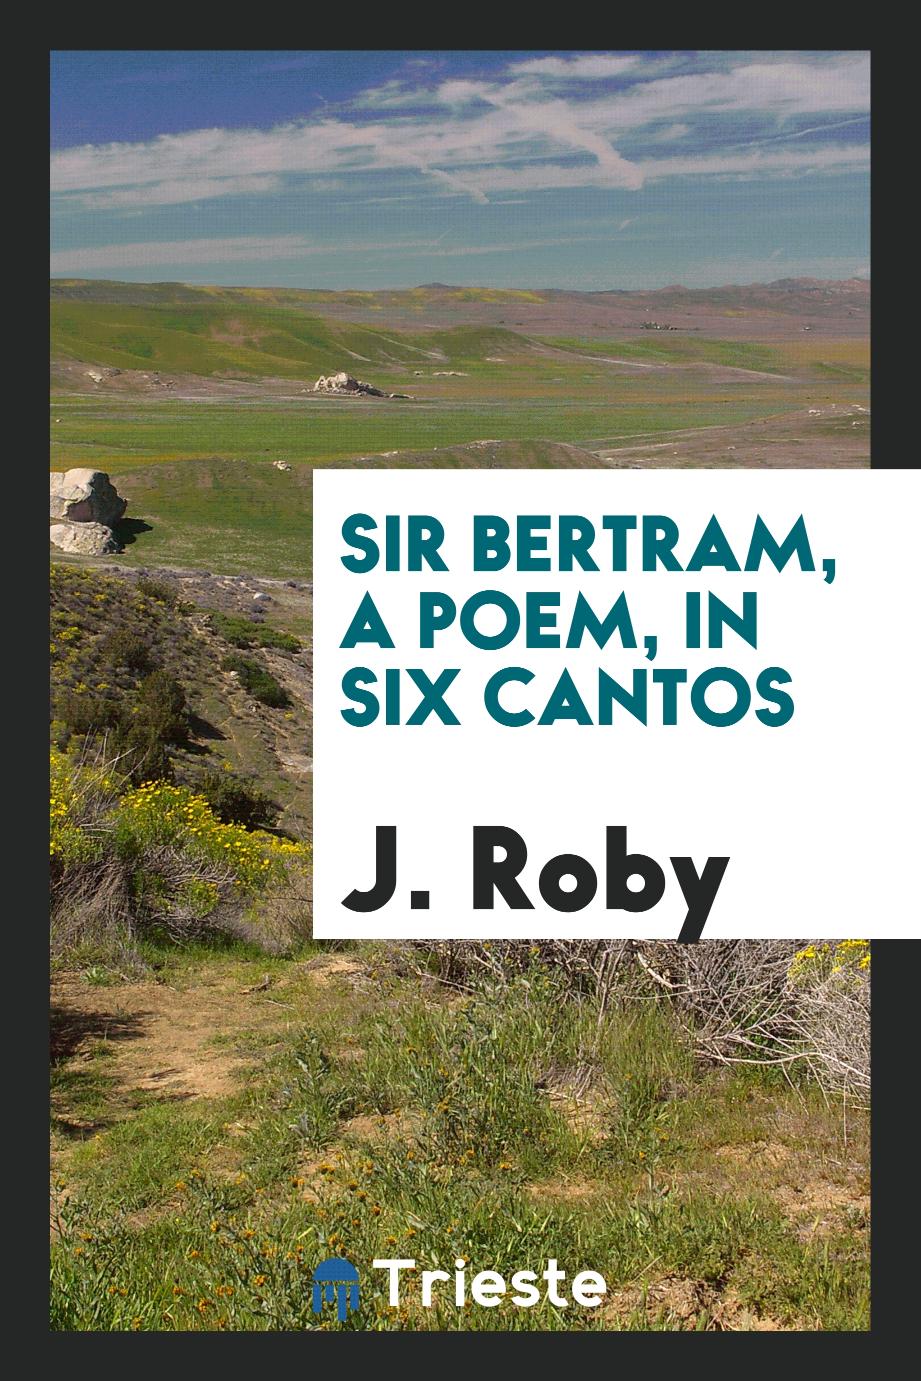 Sir Bertram, a poem, in six cantos